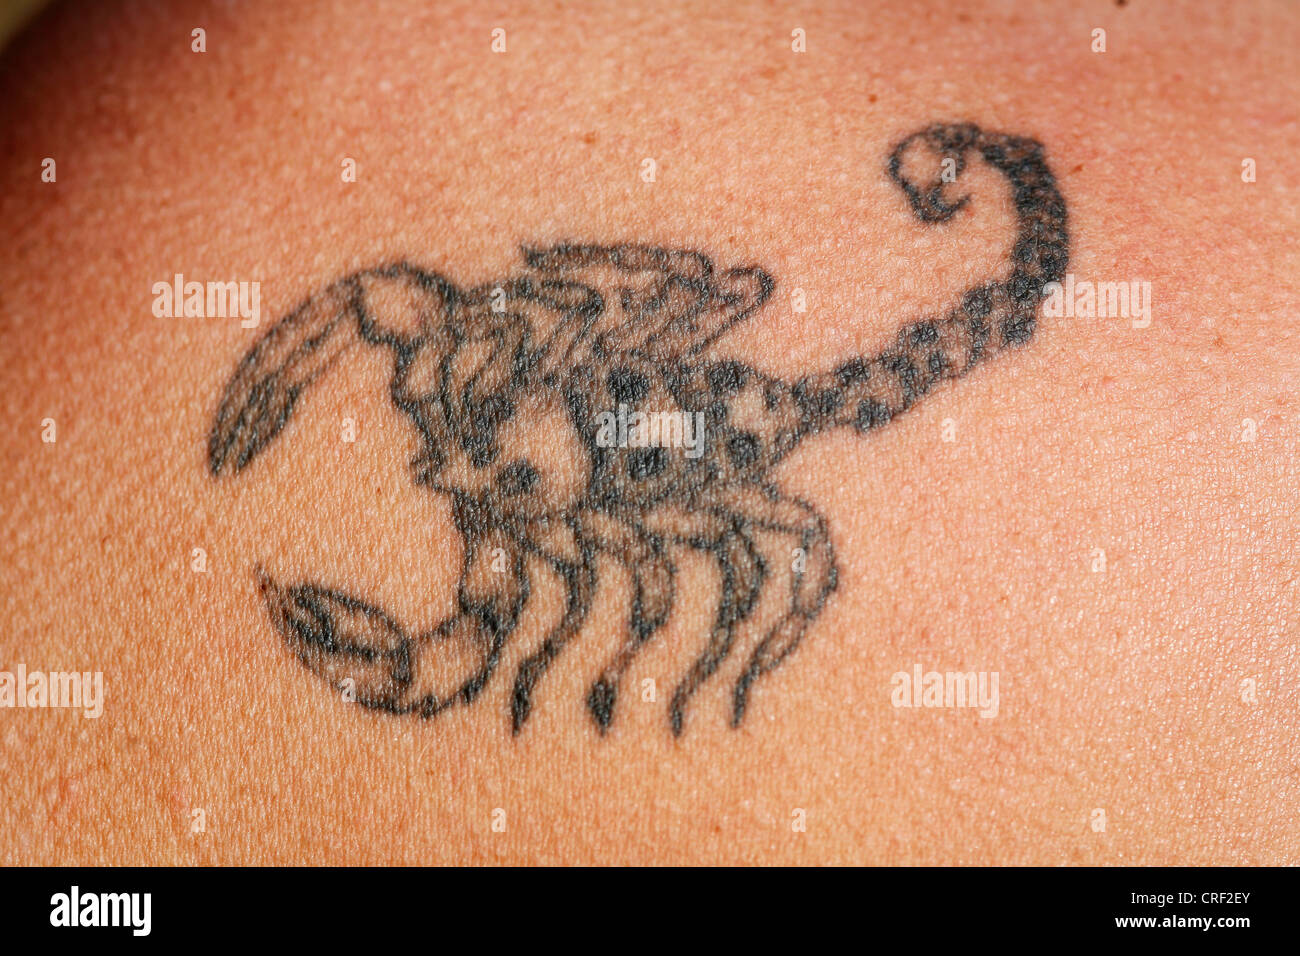 scorpion, girl tattoo and scorpion tattoo - image #7973718 on Favim.com